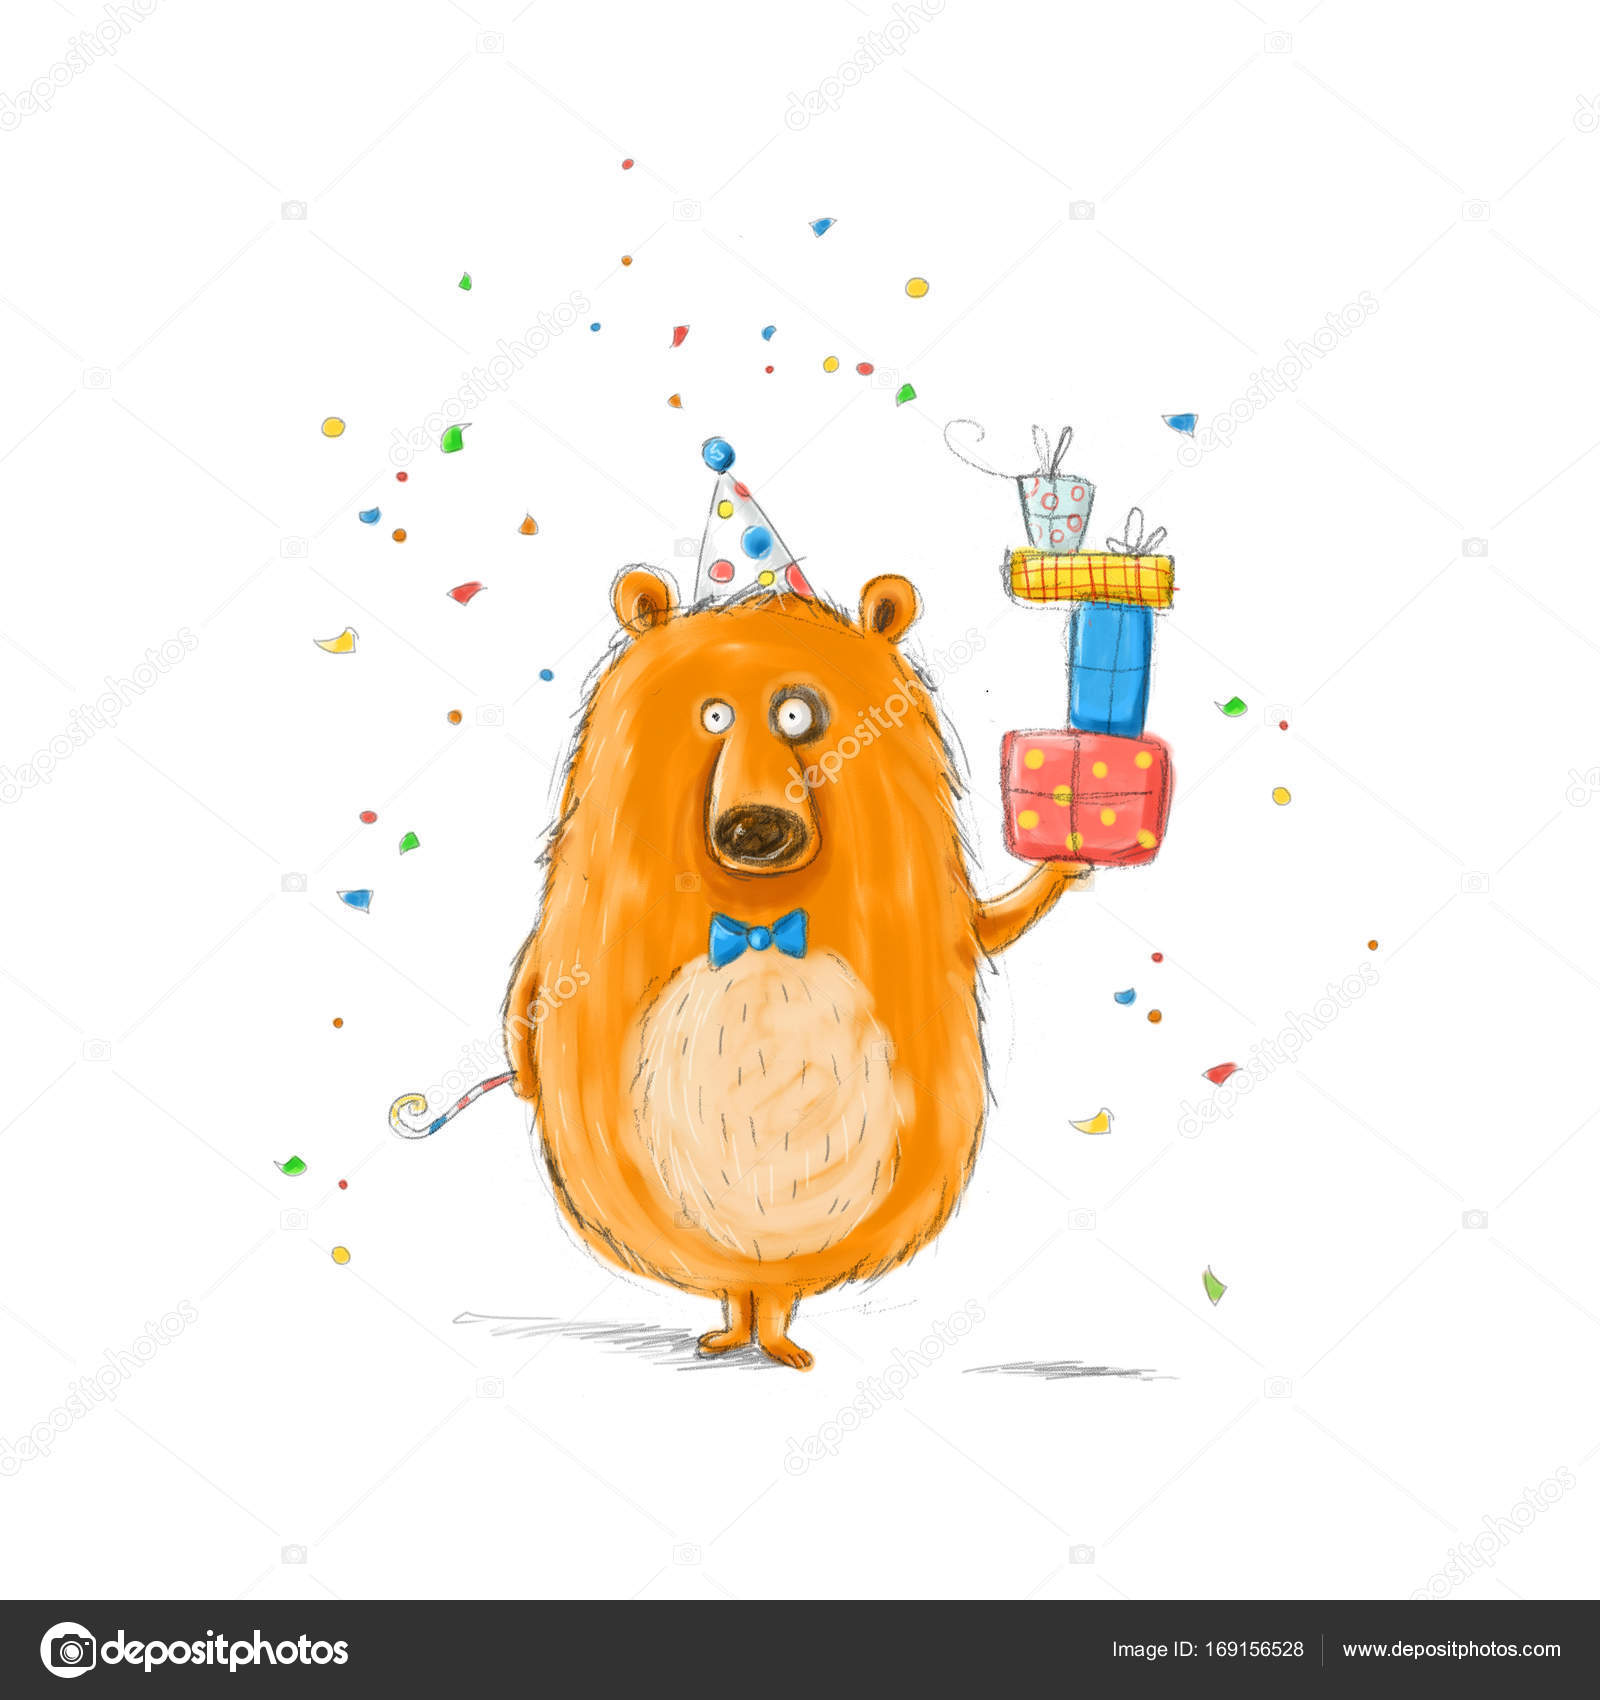 Cute Teddy Bear with Cake Birthday Invitation Card